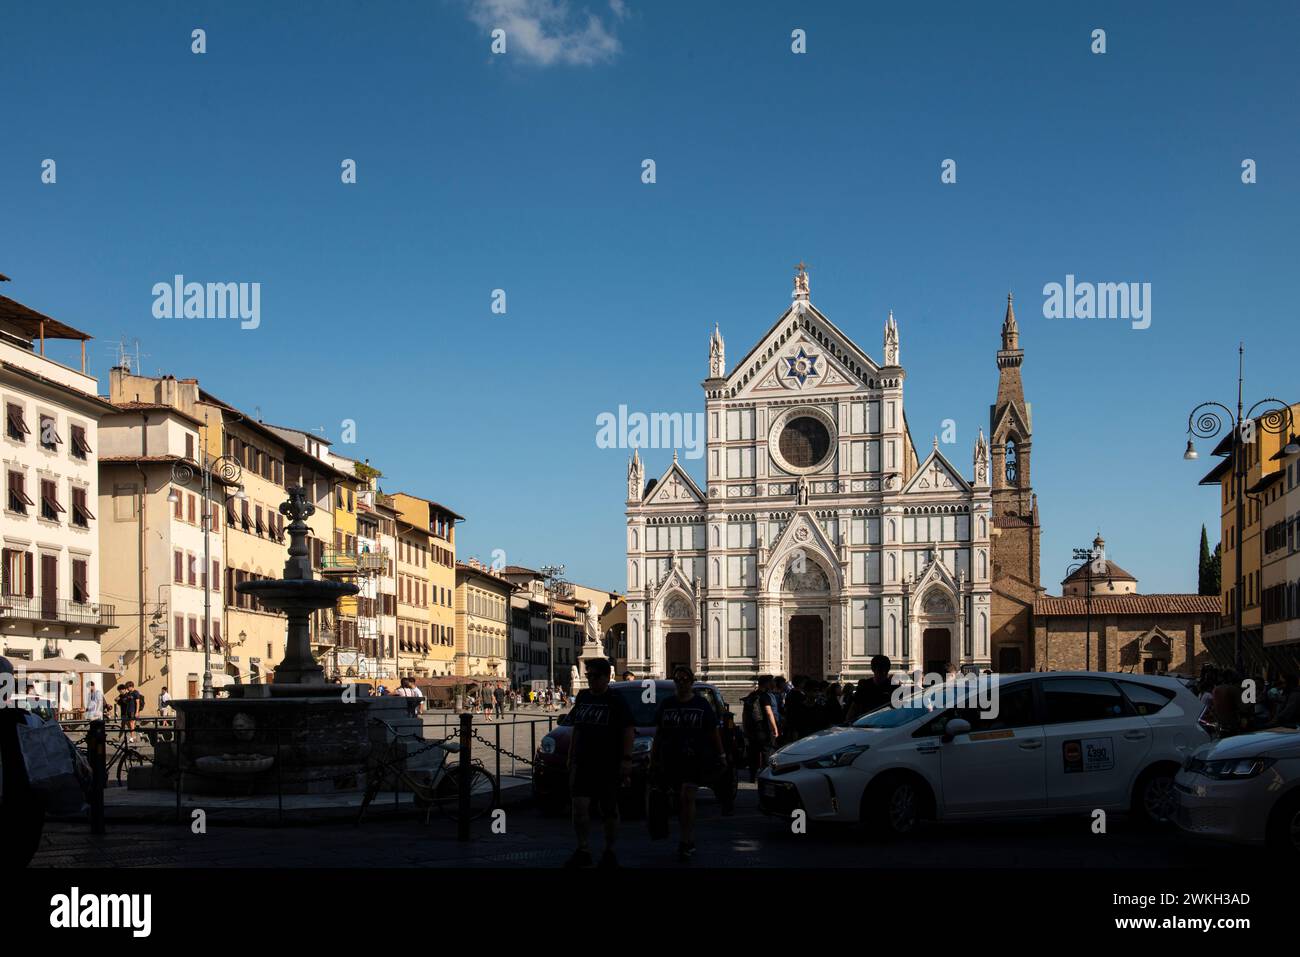 Piazza Santa Croce and the Basilica di Santa Croce, Florence, Italy Stock Photo